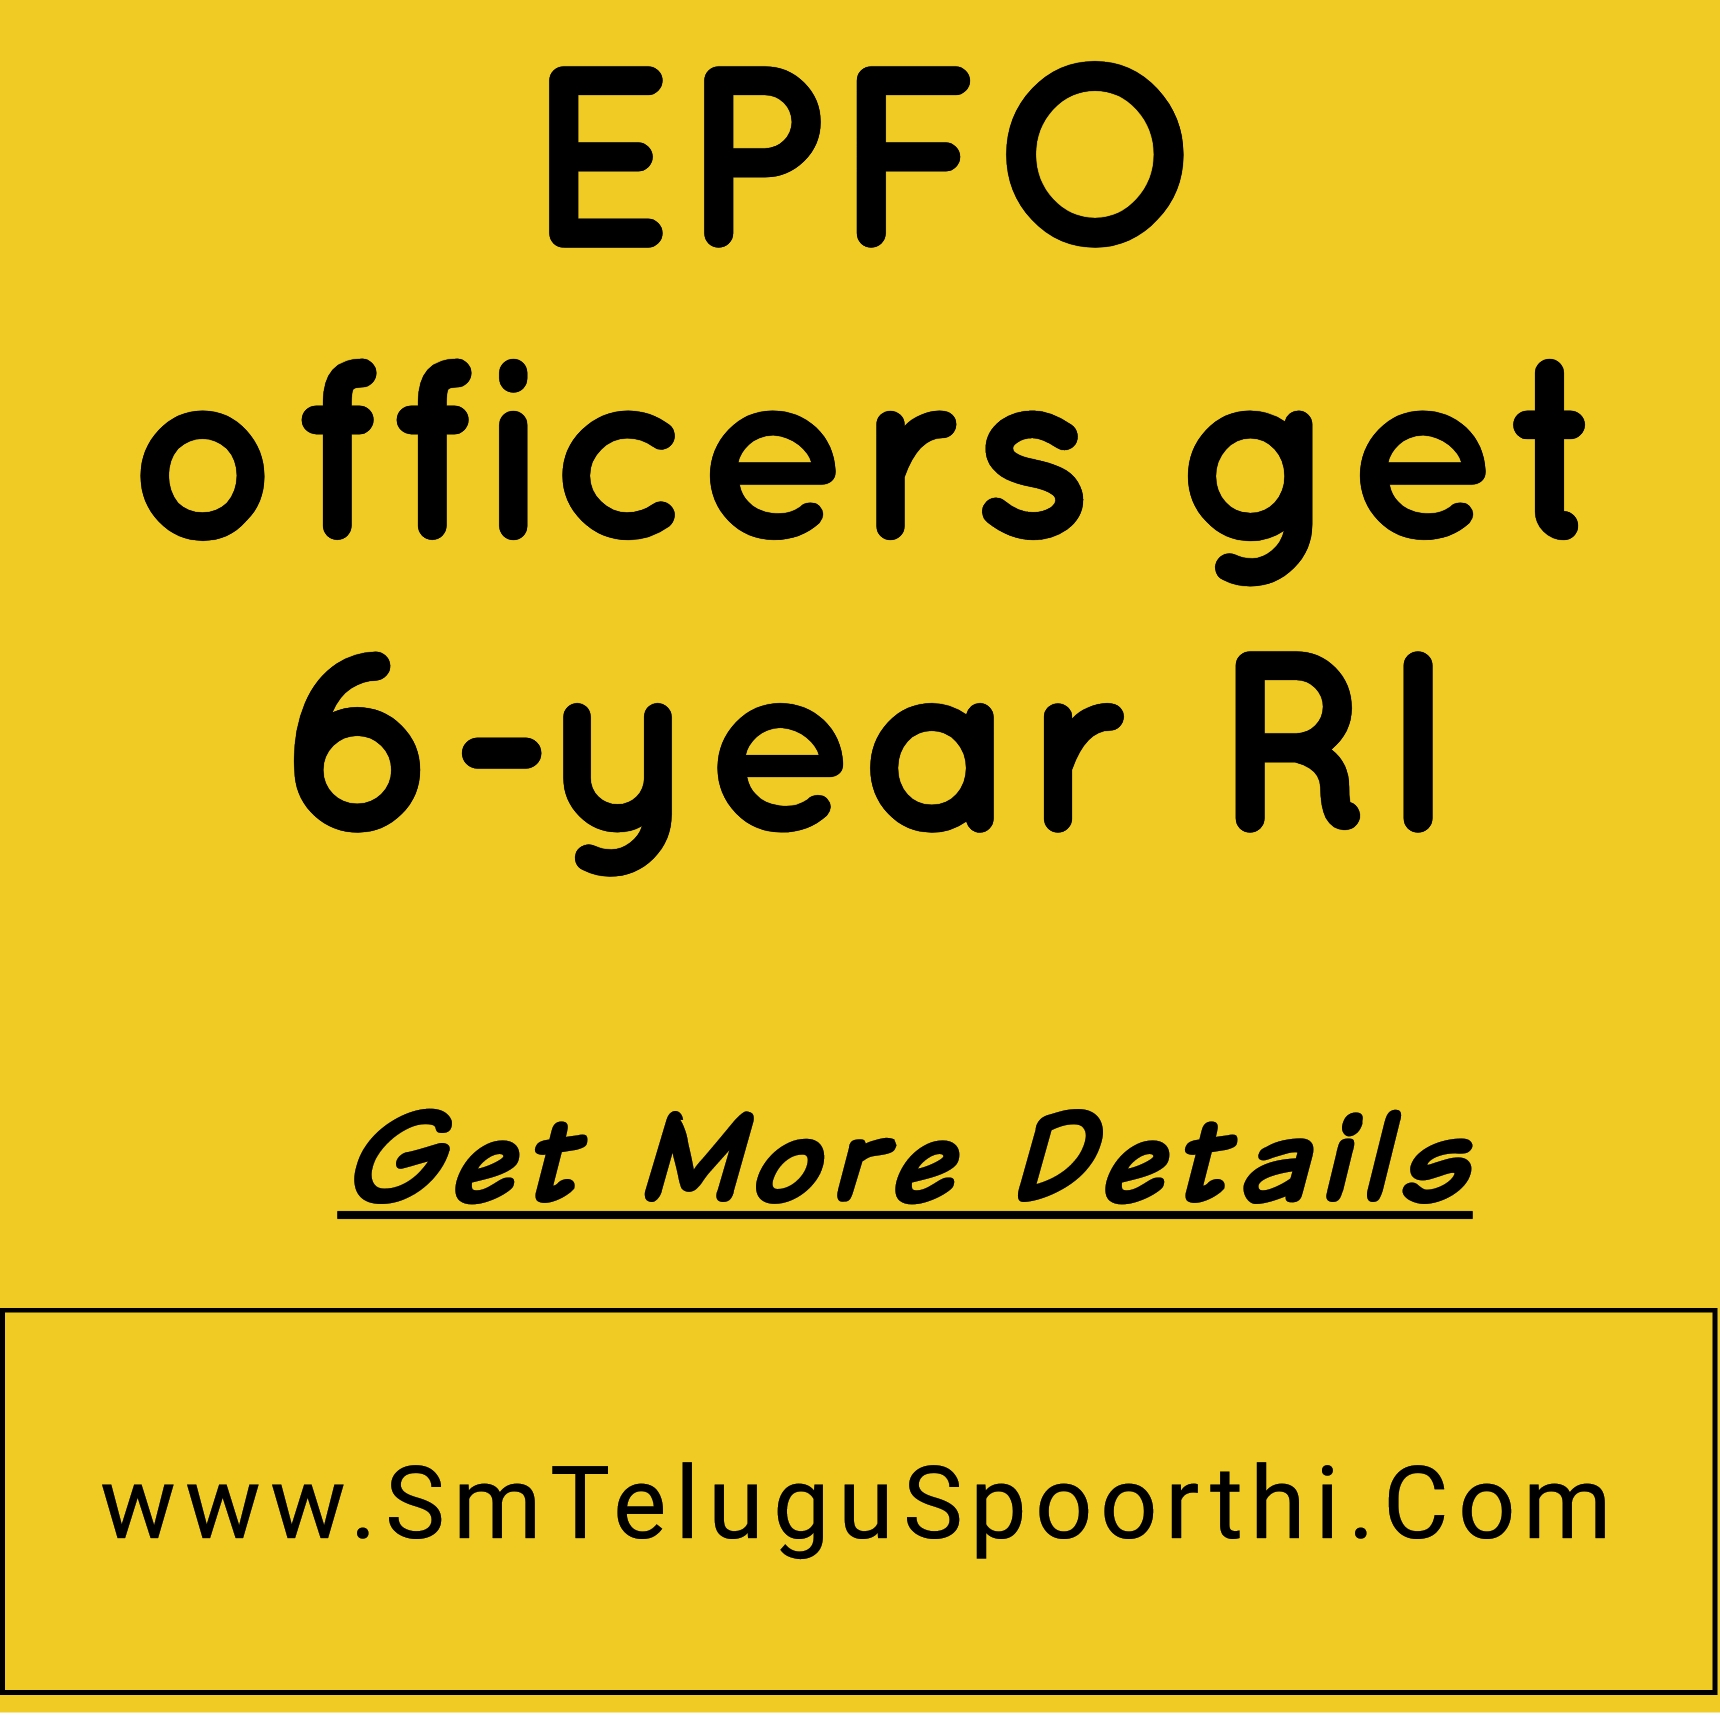 EPFO officers get 6-year RI